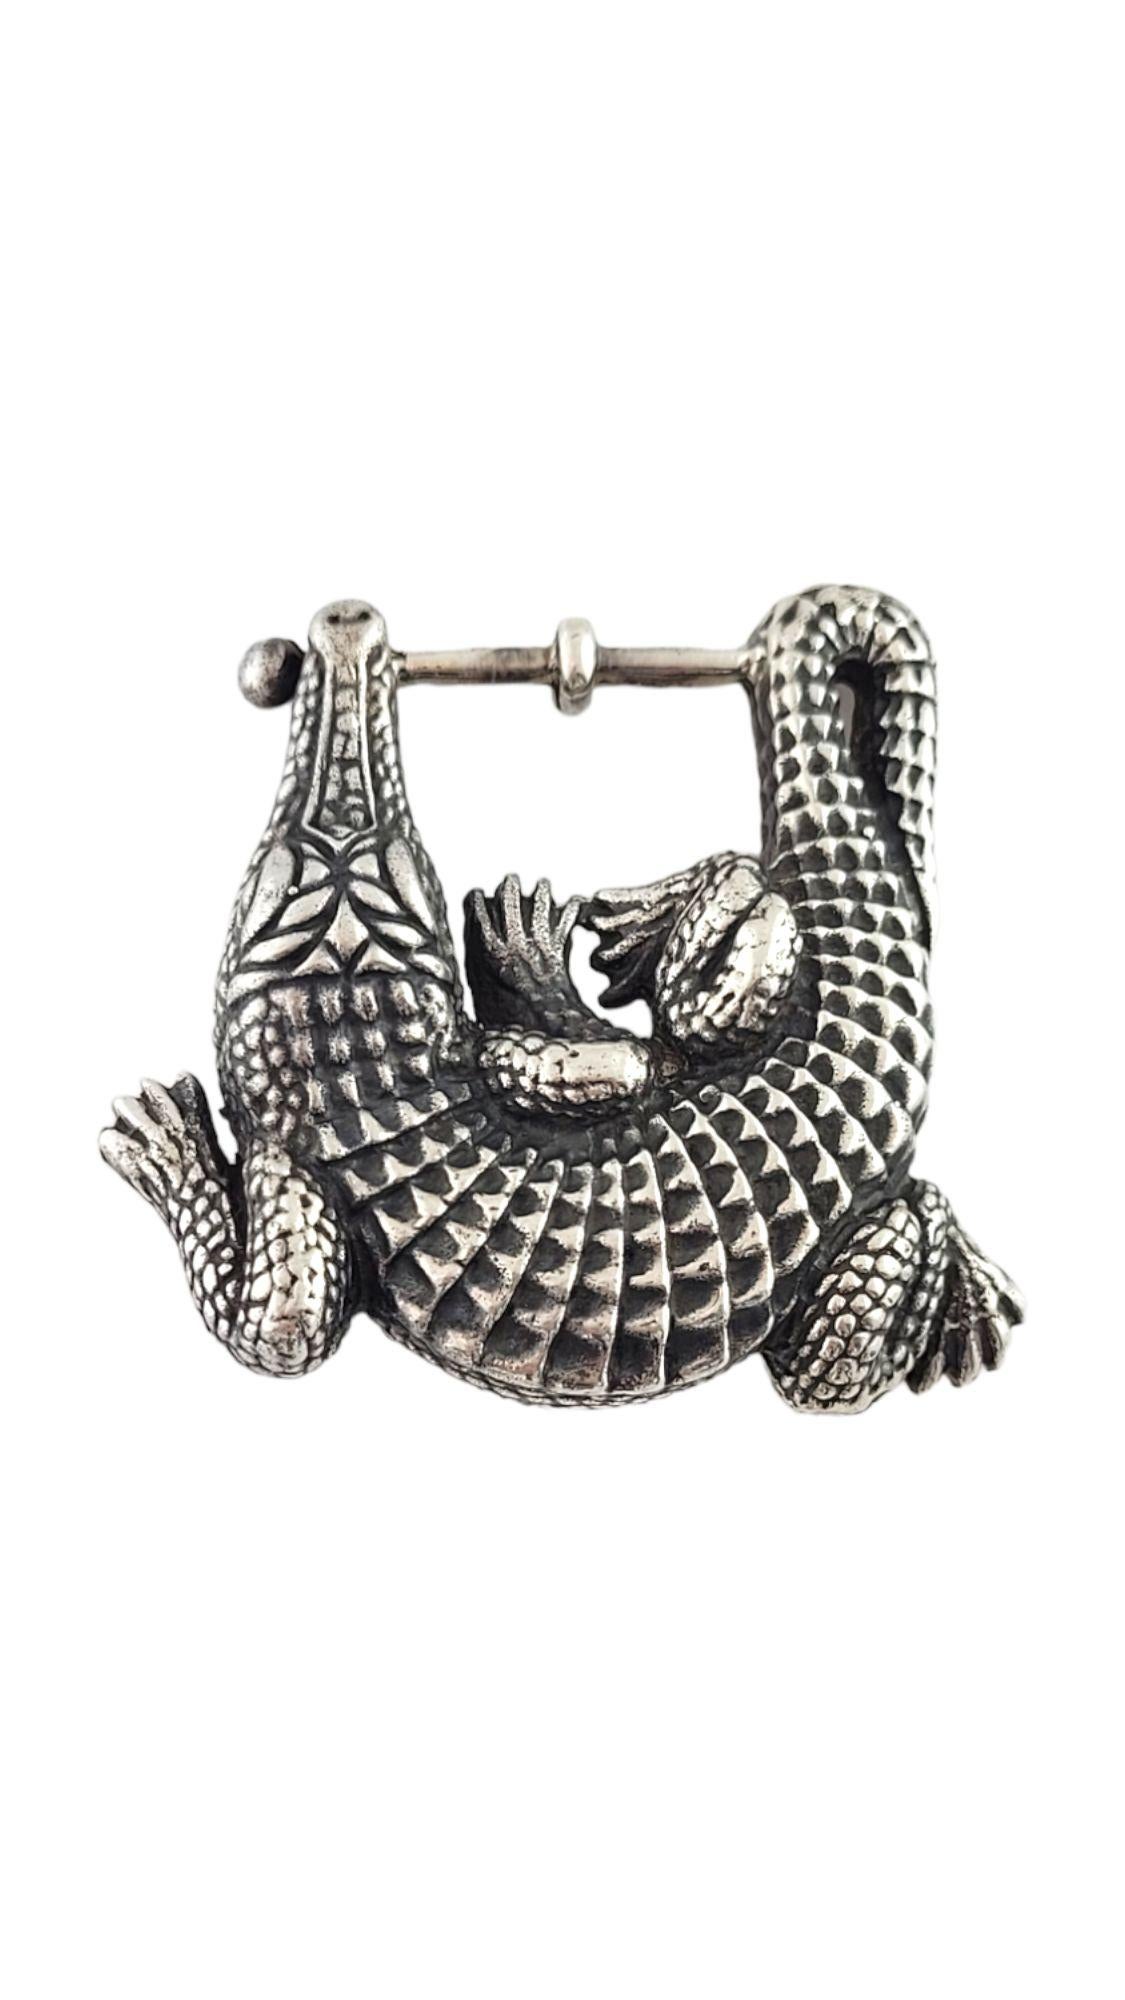 Vintage Kieselstein-Cord Alligator Belt Buckle

This beautifully detailed alligator belt buckle is crafted from sterling silver by designer Kieselstein-Cord!

Size: 51.8mm X 59.9mm X 19.2mm

Weight: 56.6 g/ 36.3 dwt

Hallmark: KIESELSTEIN CORD USA